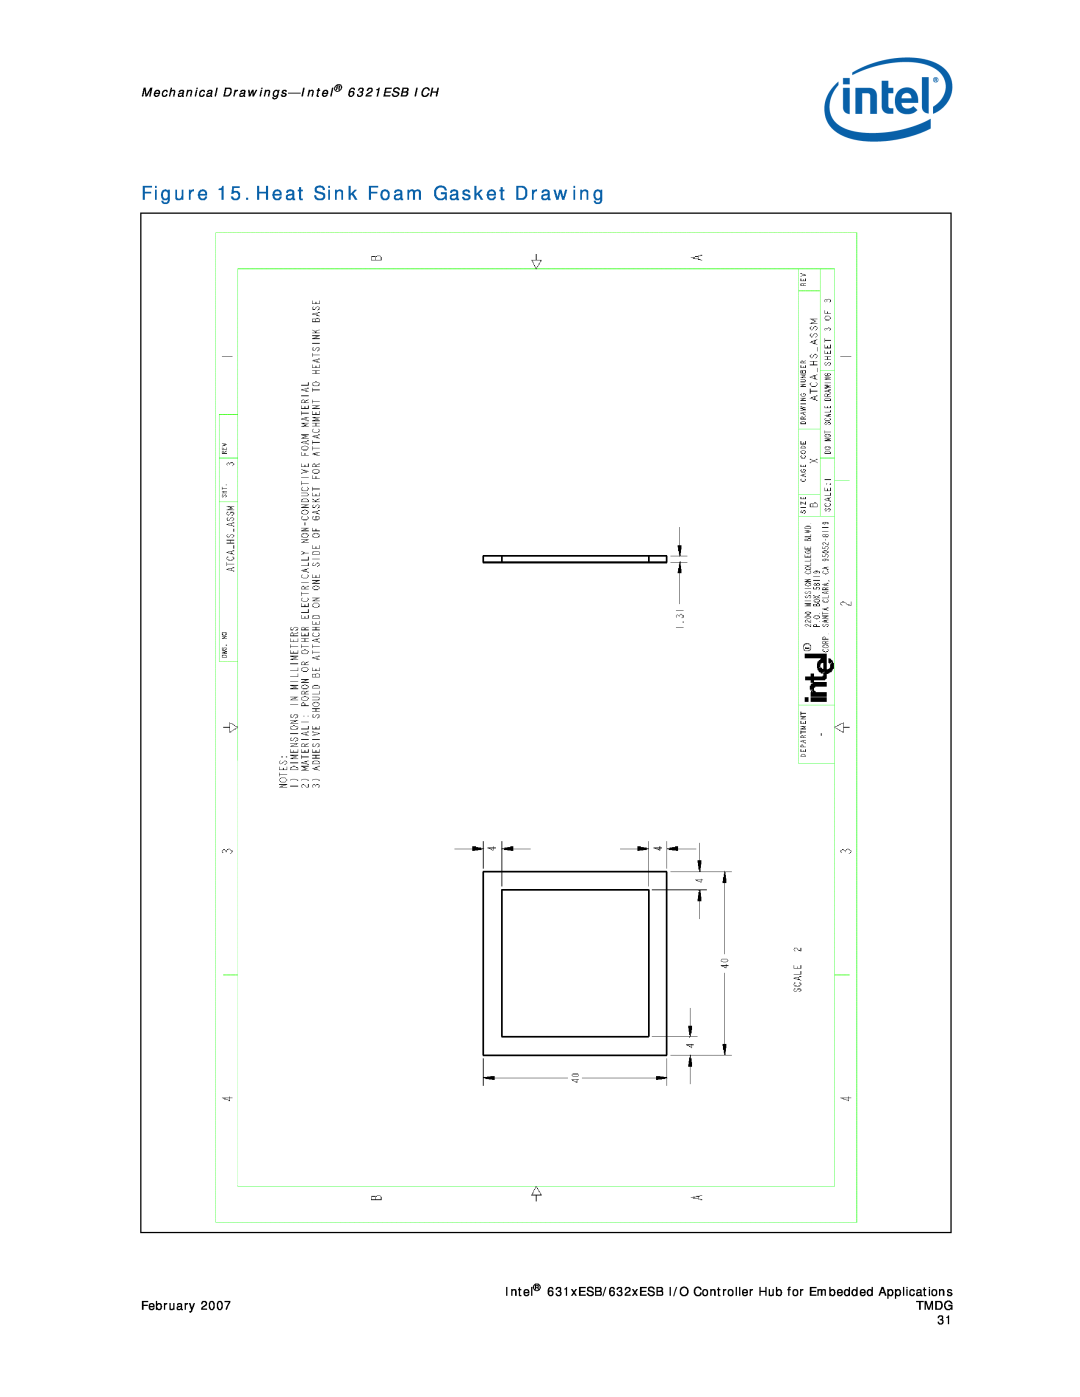 Intel 632xESB, 631xESB manual Heat Sink Foam Gasket Drawing, Mechanical Drawings-Intel 6321ESB ICH 